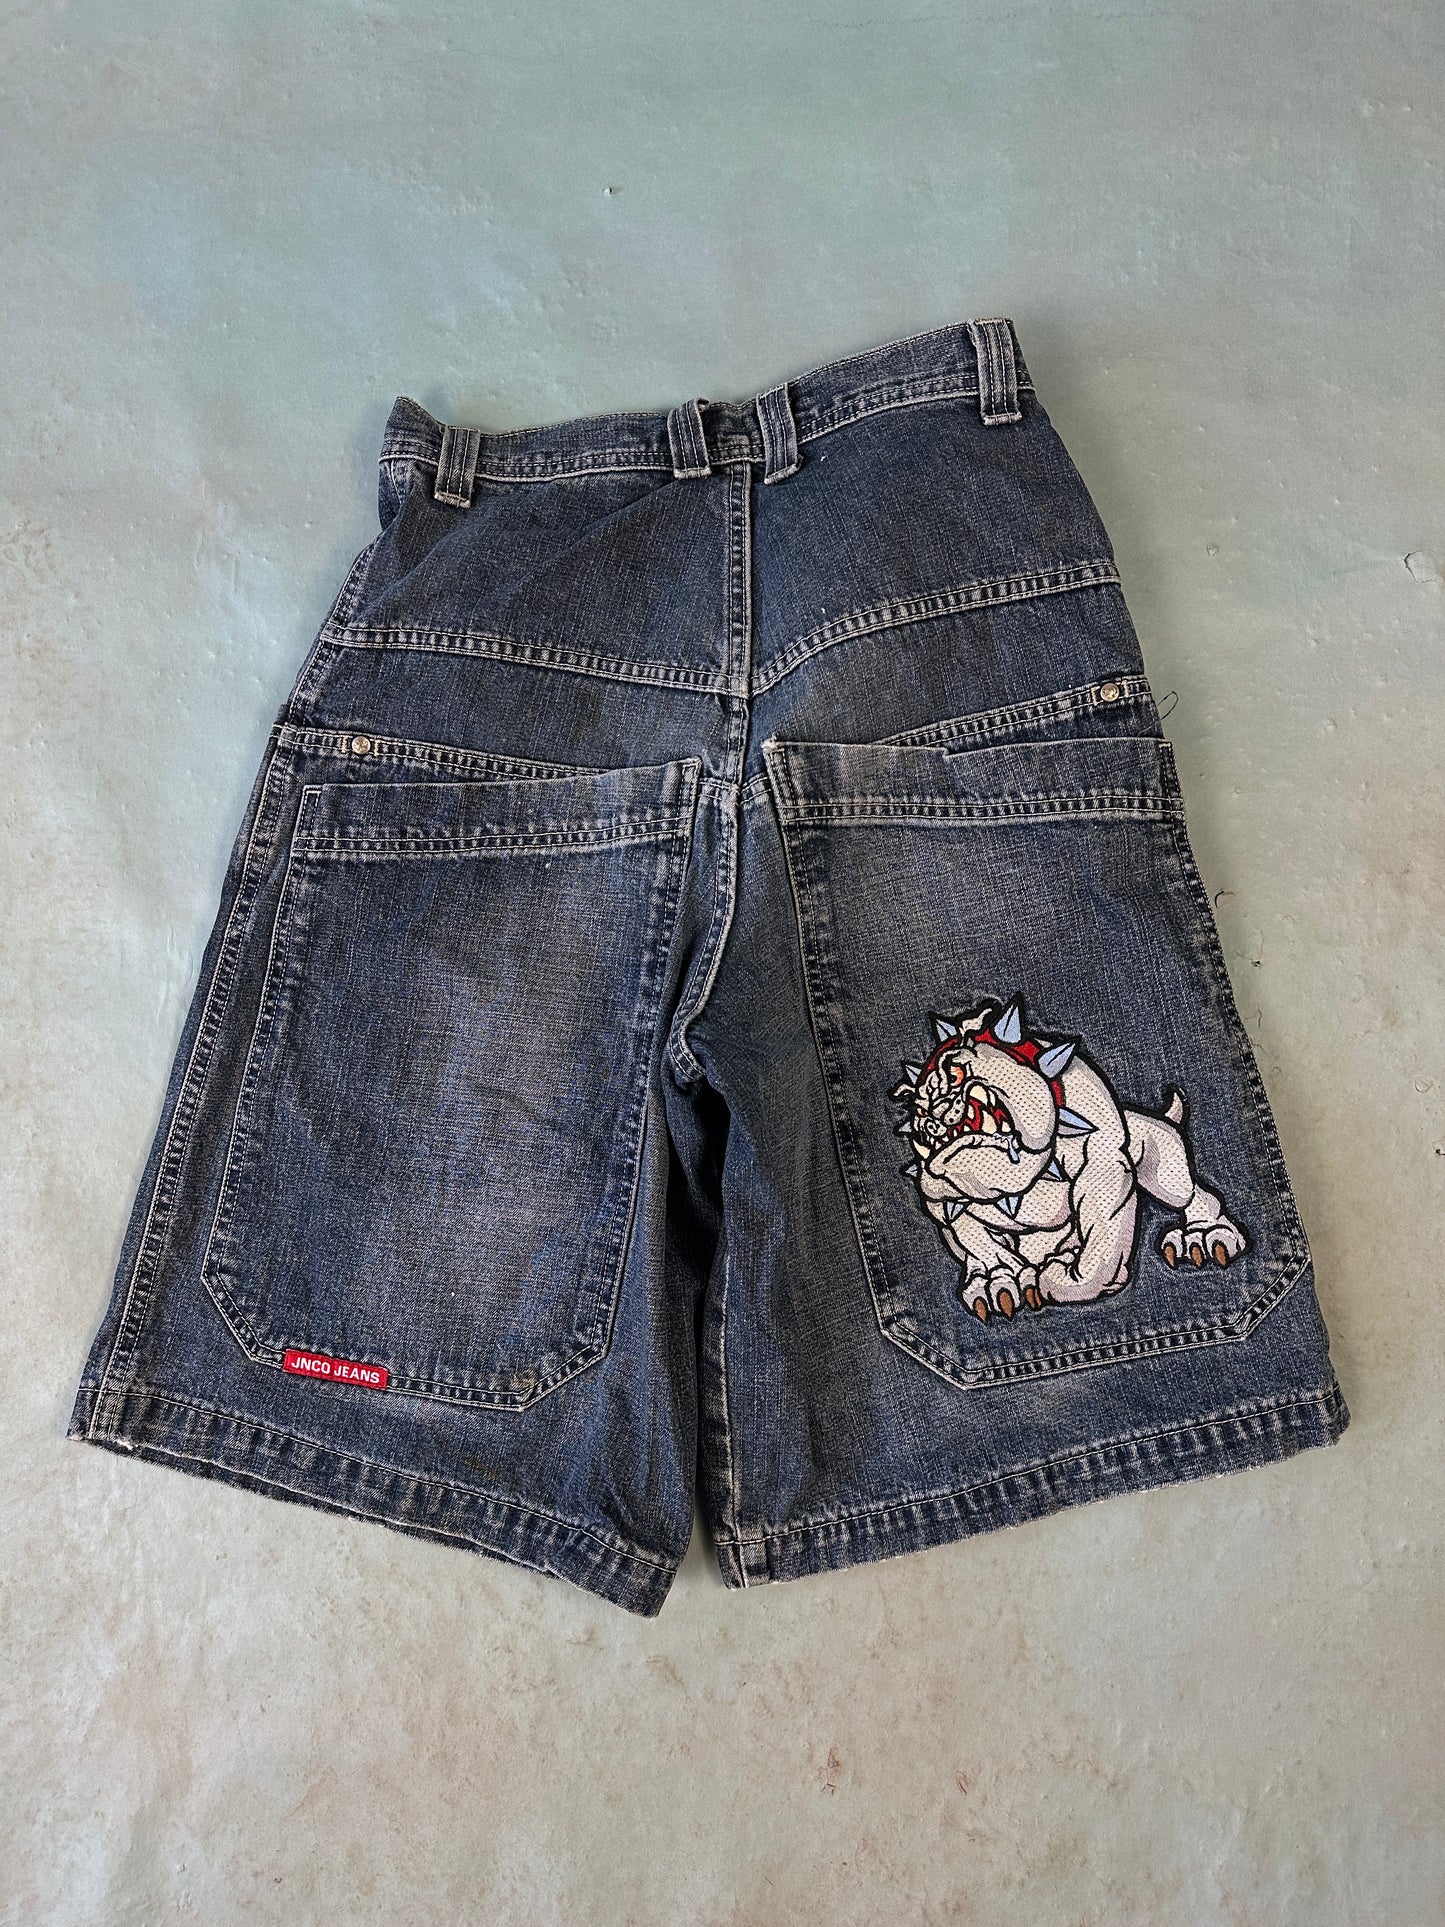 JNCO Bulldog Vintage Shorts - 30